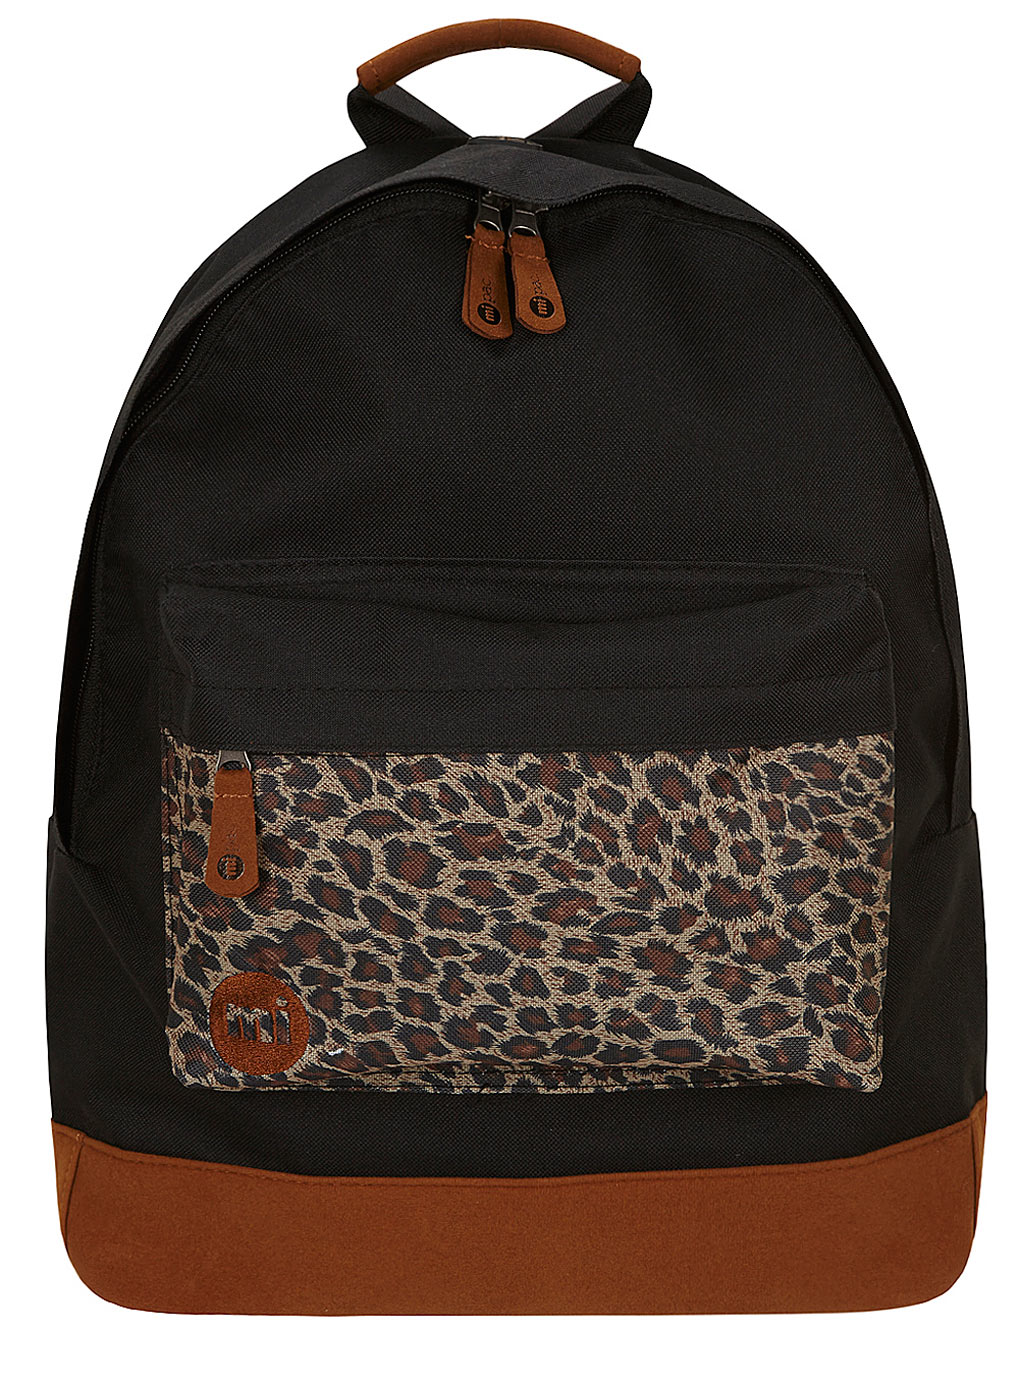 Dorothy Perkins Mi pack leopard print backpack 18367071